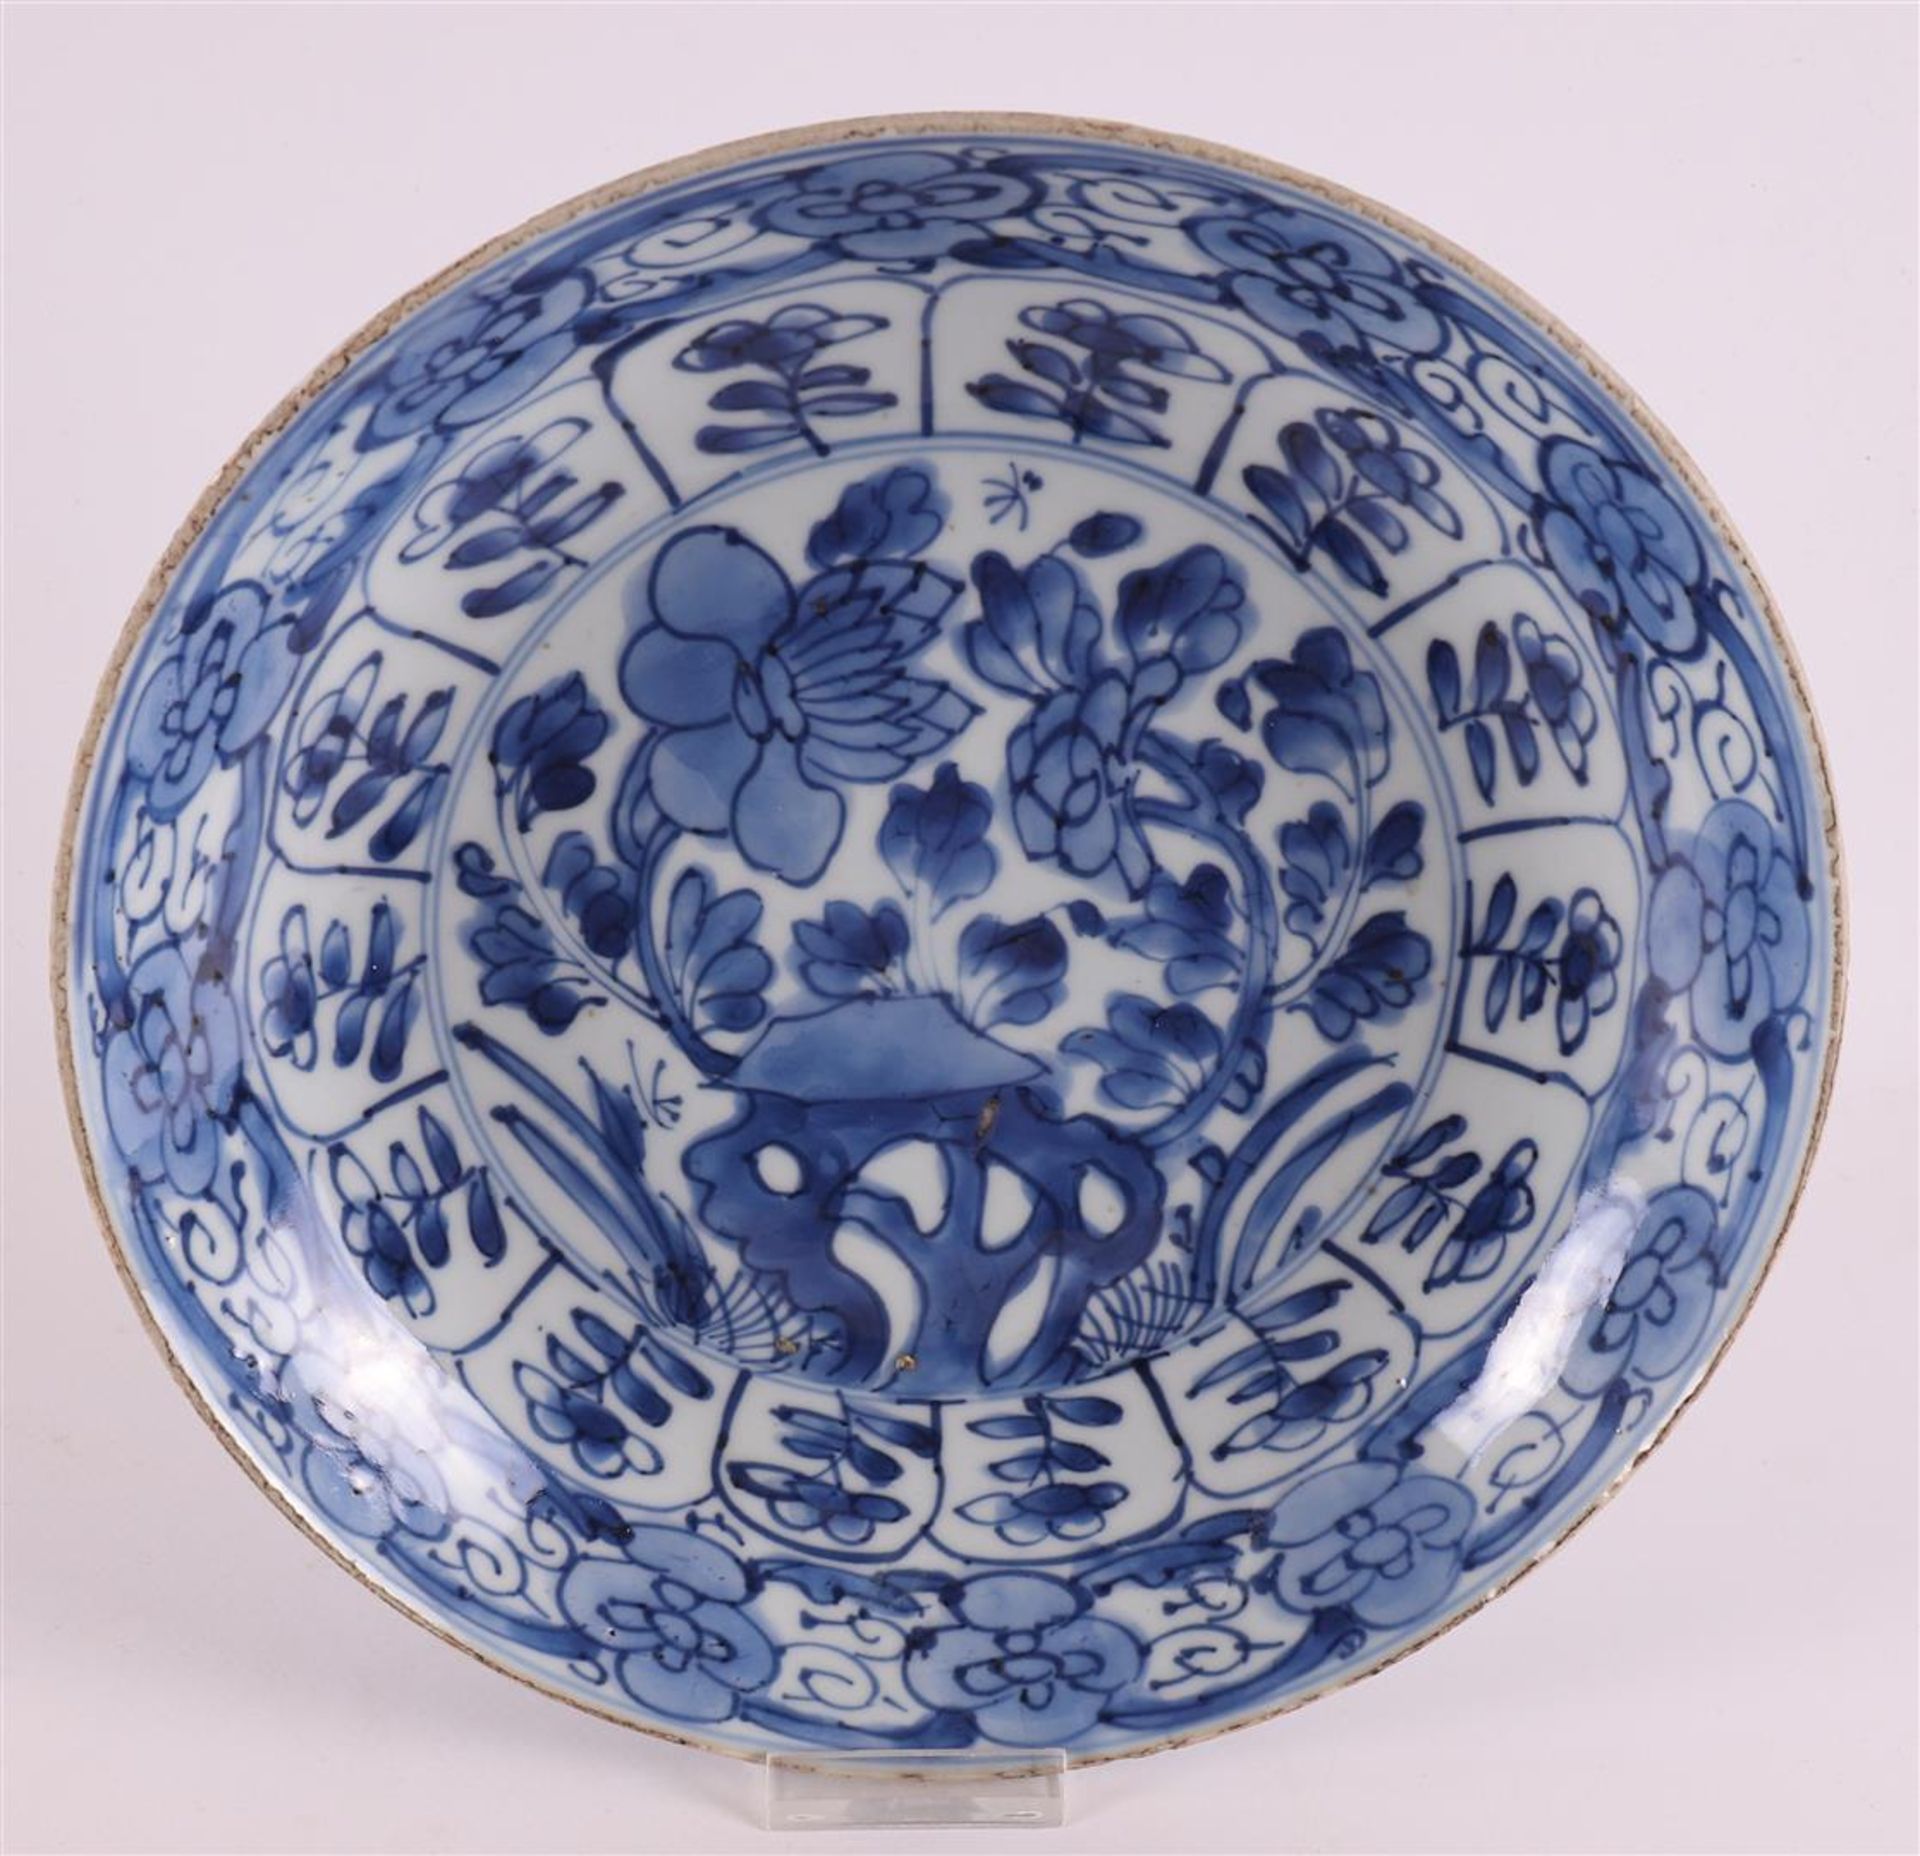 A blue and white porcelain deep dish, China, Kangxi, around 1700. Blue underglaze decoration of